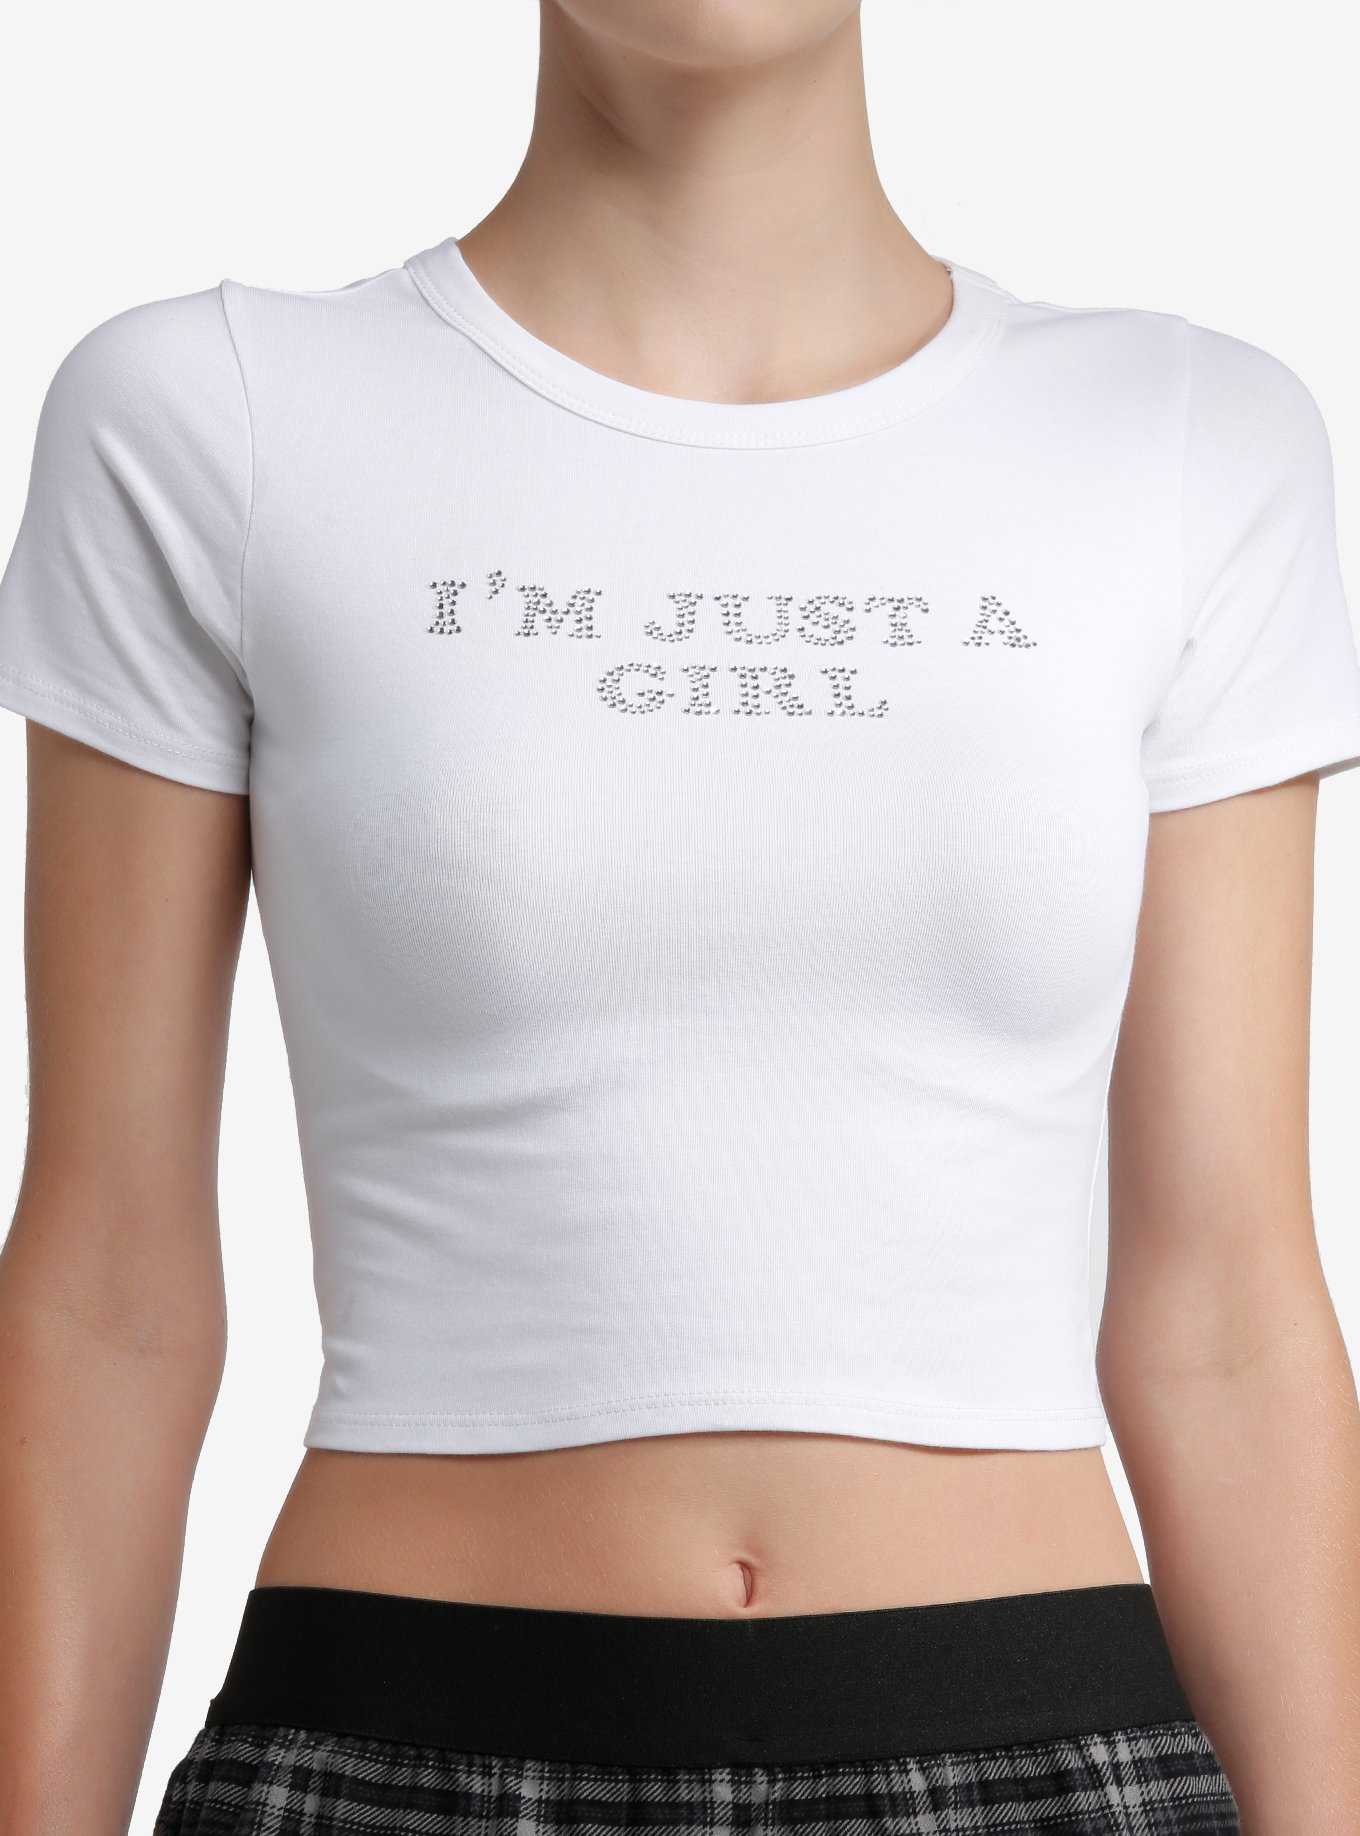 I'm Just A Girl Rhinestone Girls Baby T-Shirt, , hi-res